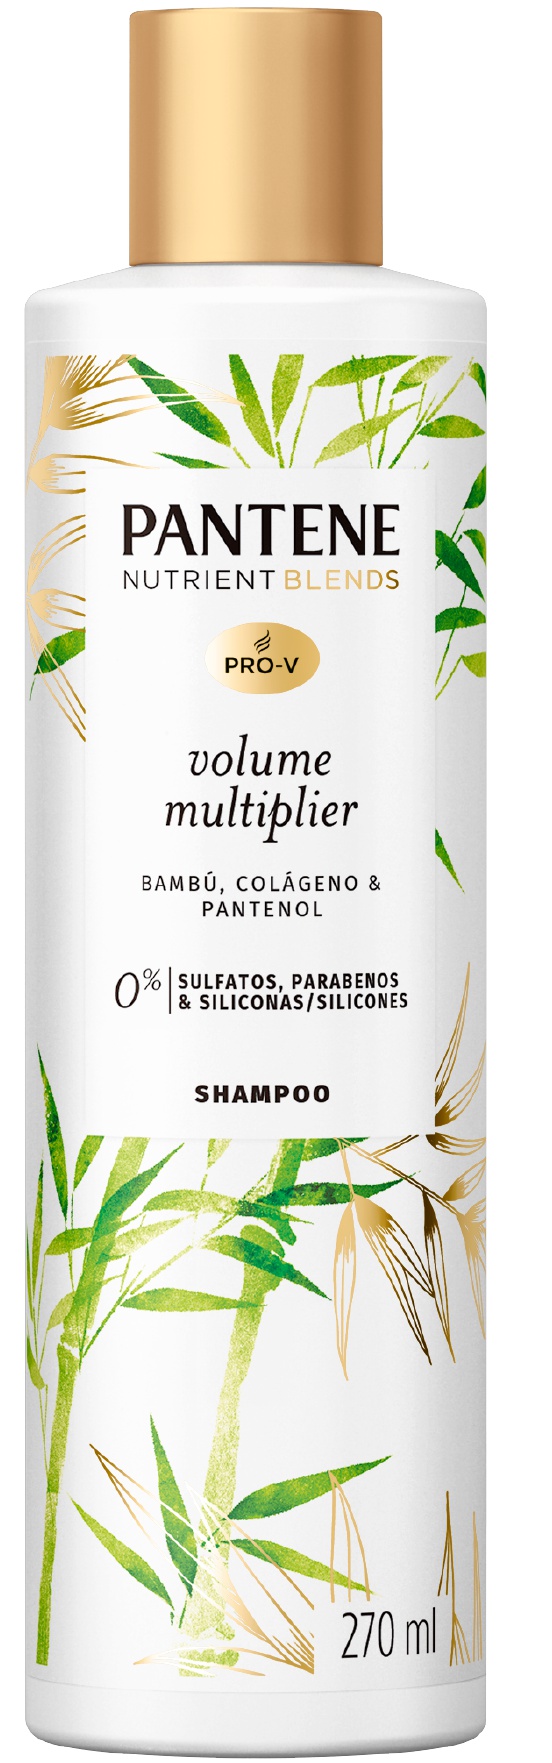 Pantene Nutrient Blends Volume Multiplier Shampoo